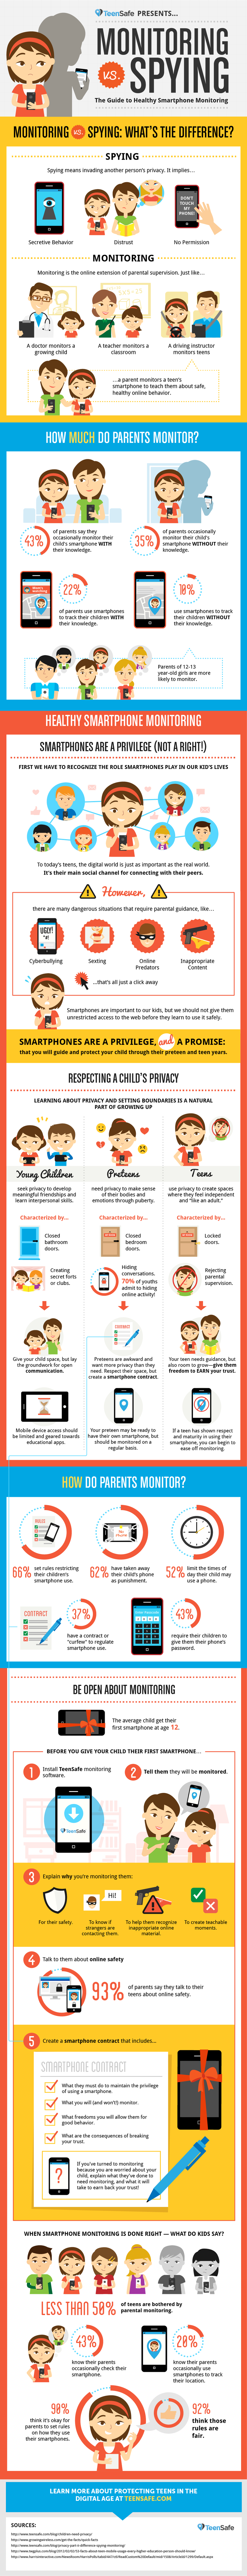 guia-padres-monitorizacion-smartphones-hijos